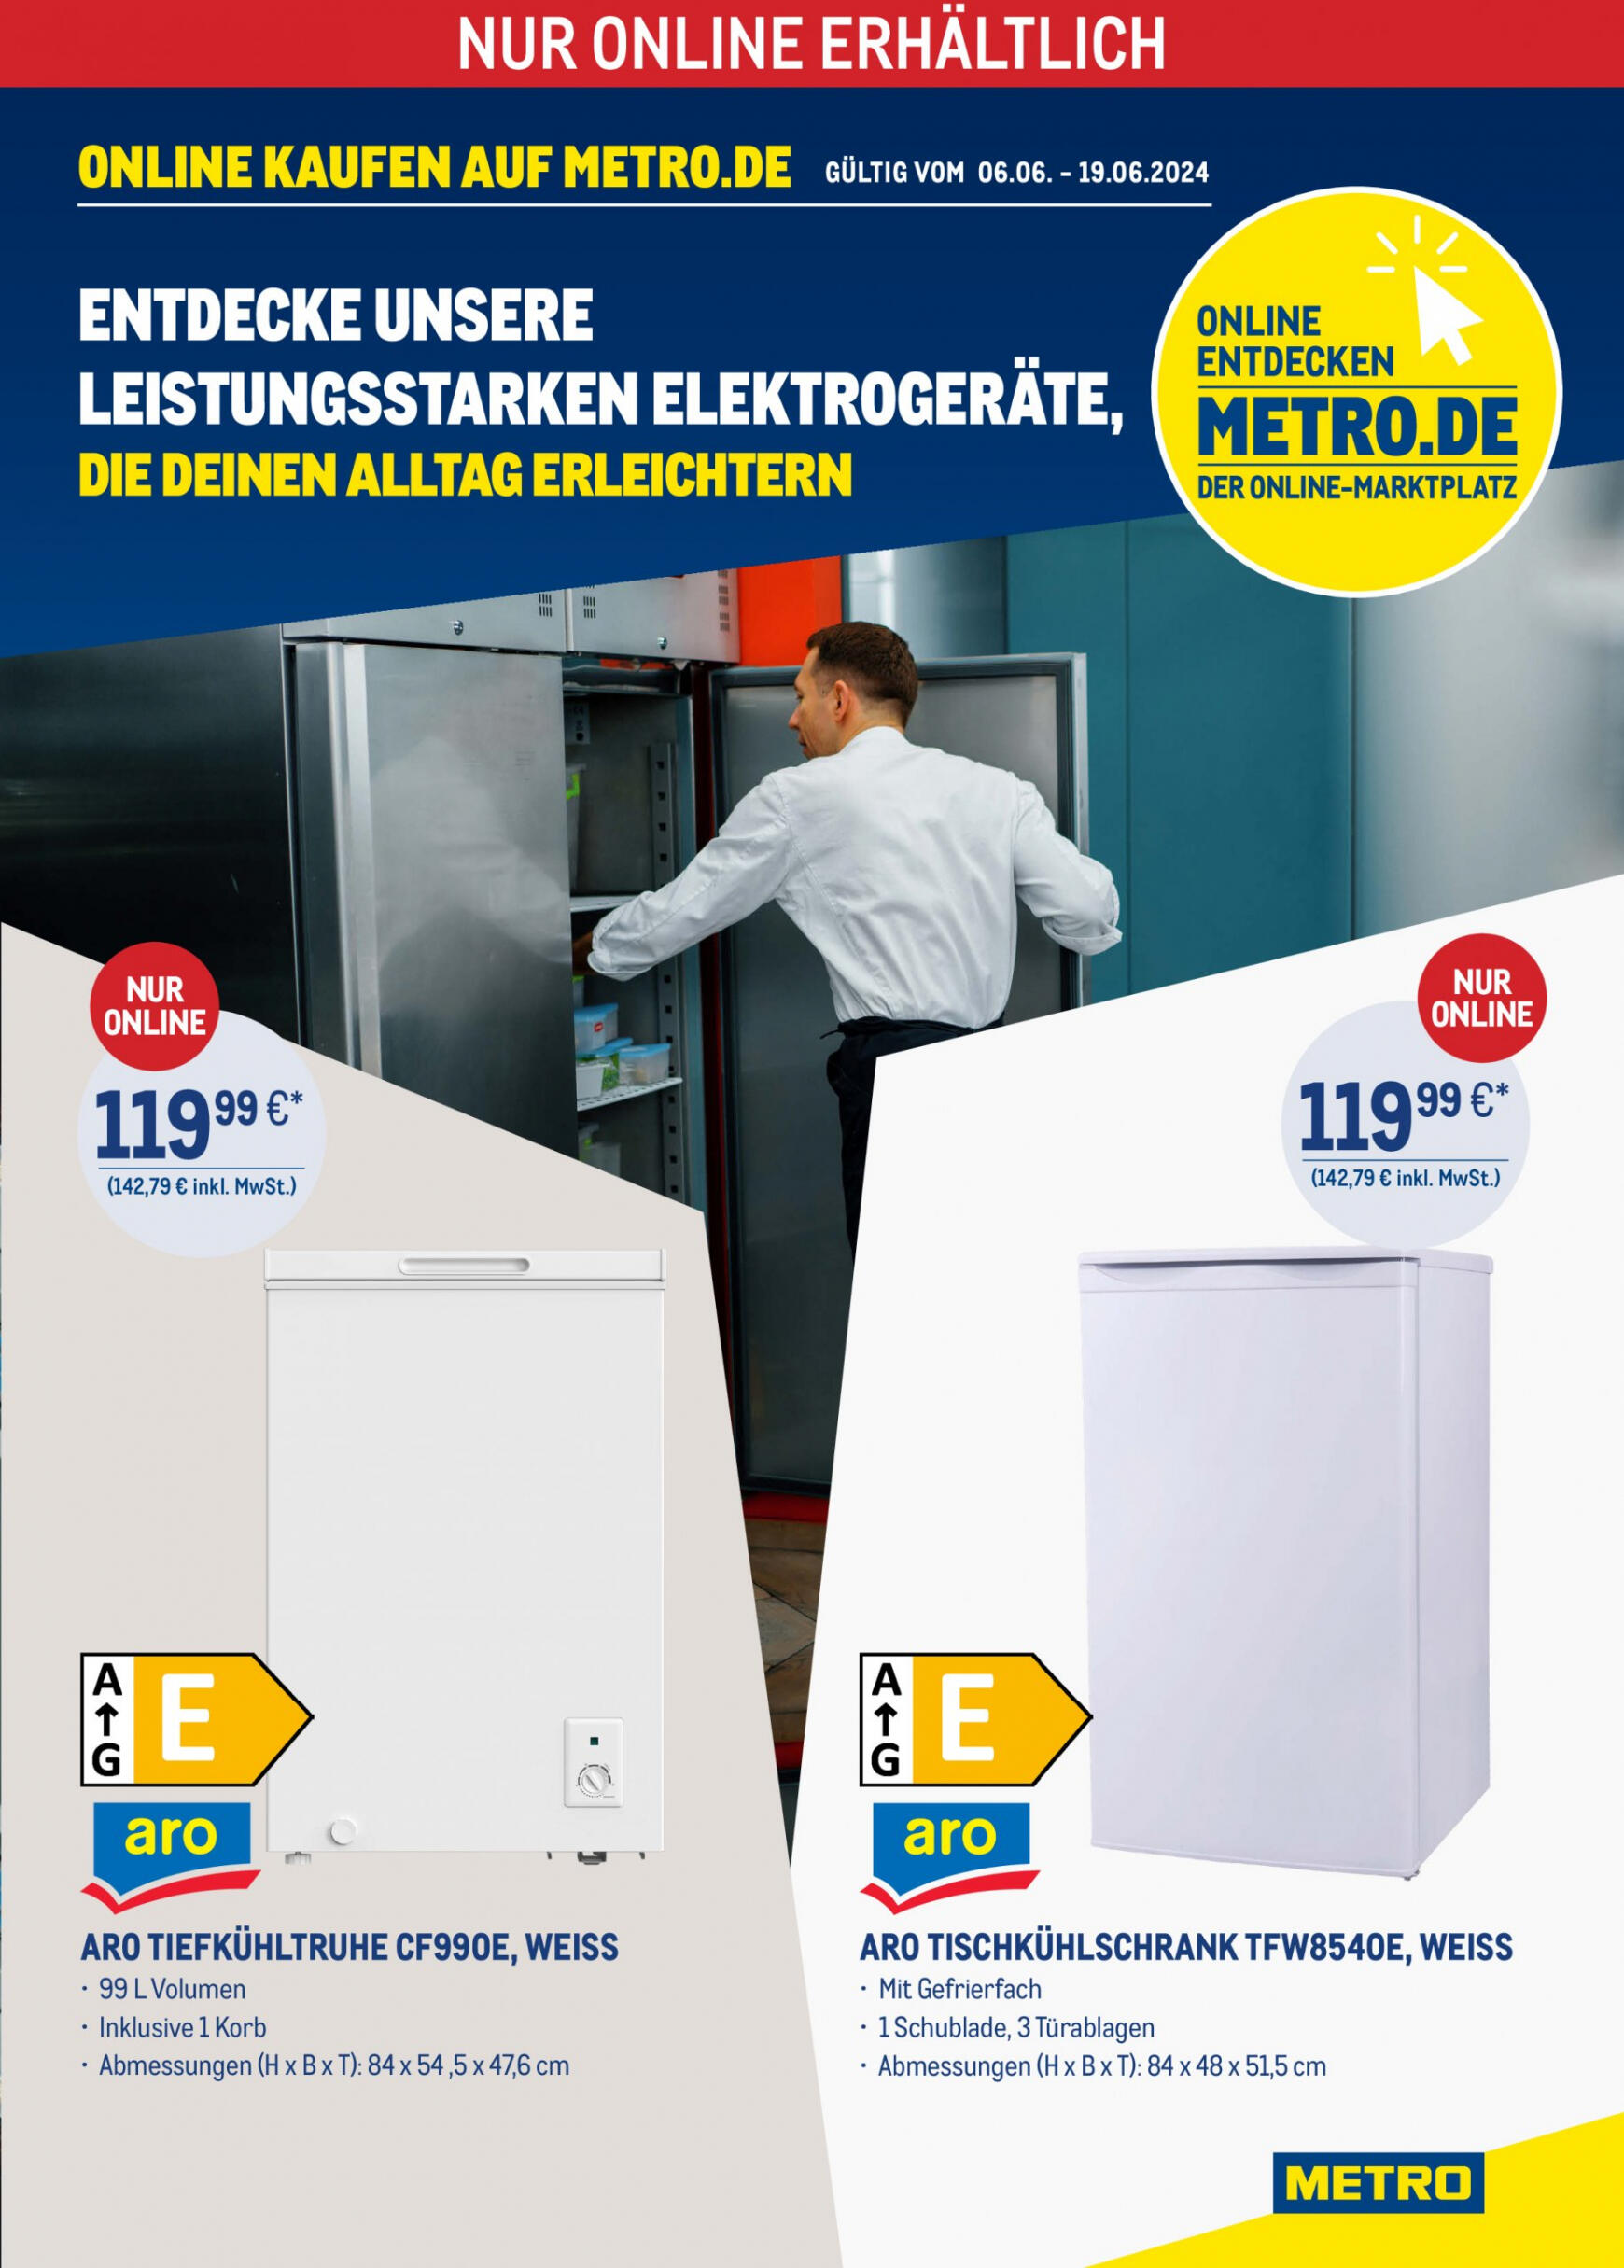 metro - Flyer Metro - Leistungsstarken Elektrogerate aktuell 06.06. - 16.06. - page: 1